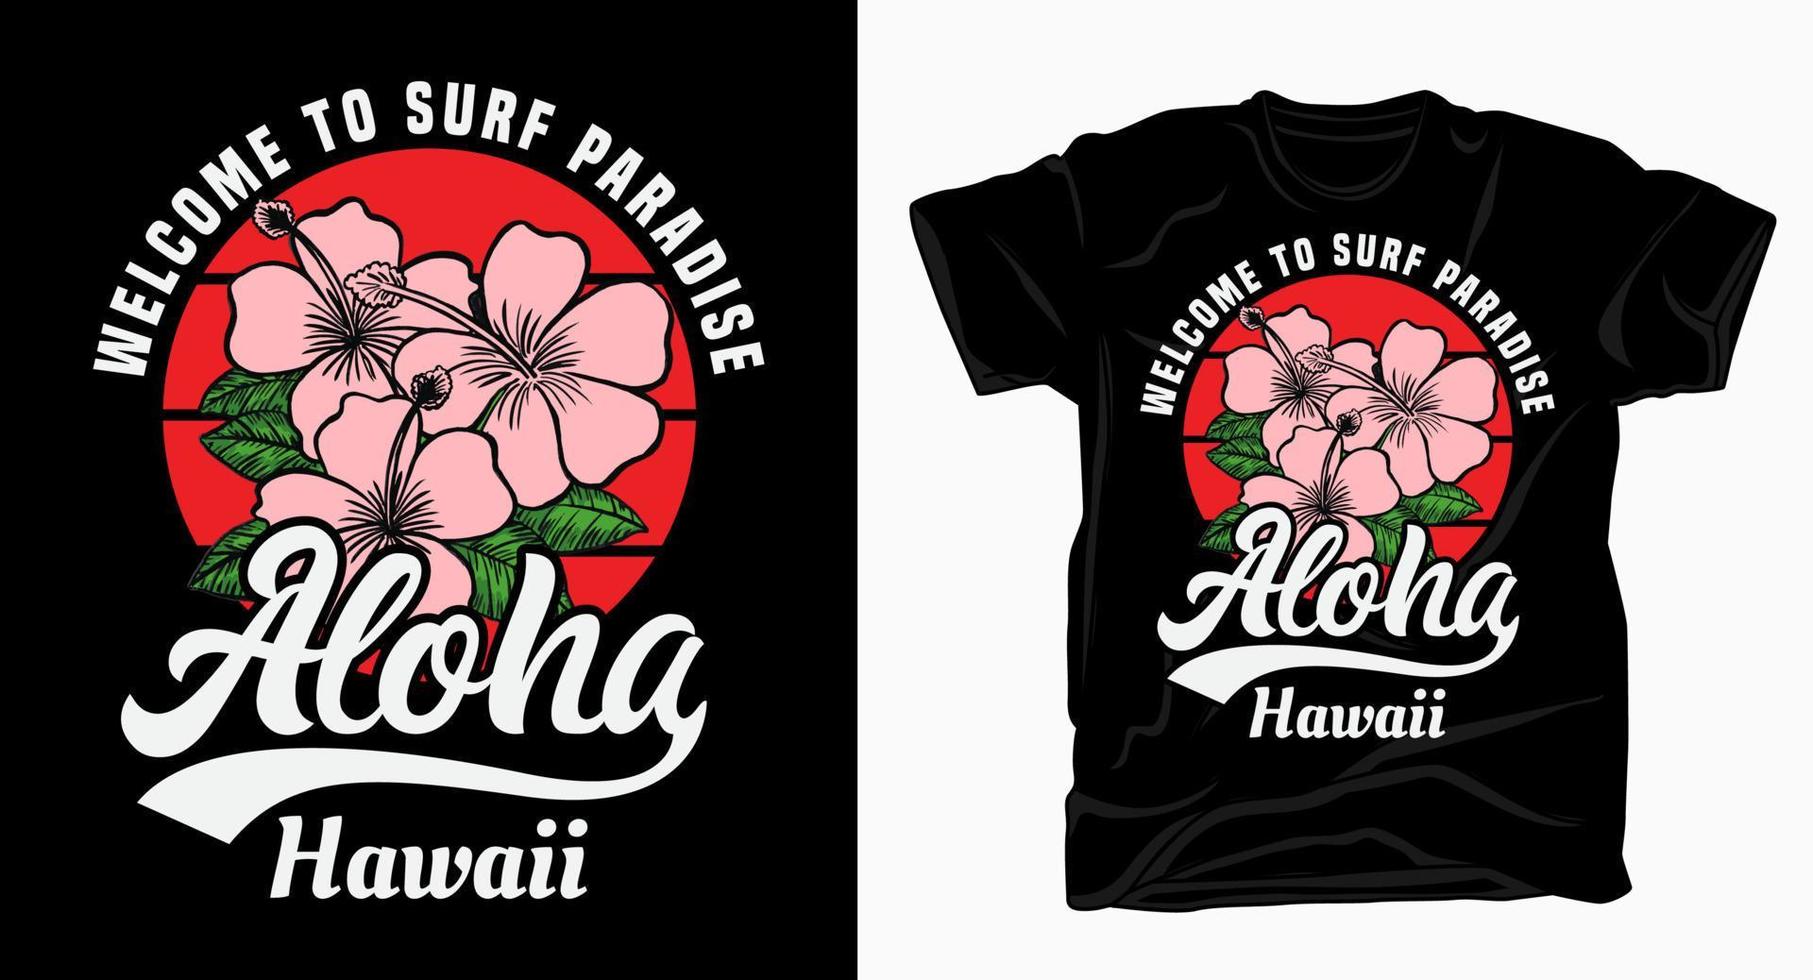 Willkommen im Surfparadies Aloha Hawaii Typografie mit Hibiskusblüten-T-Shirt vektor